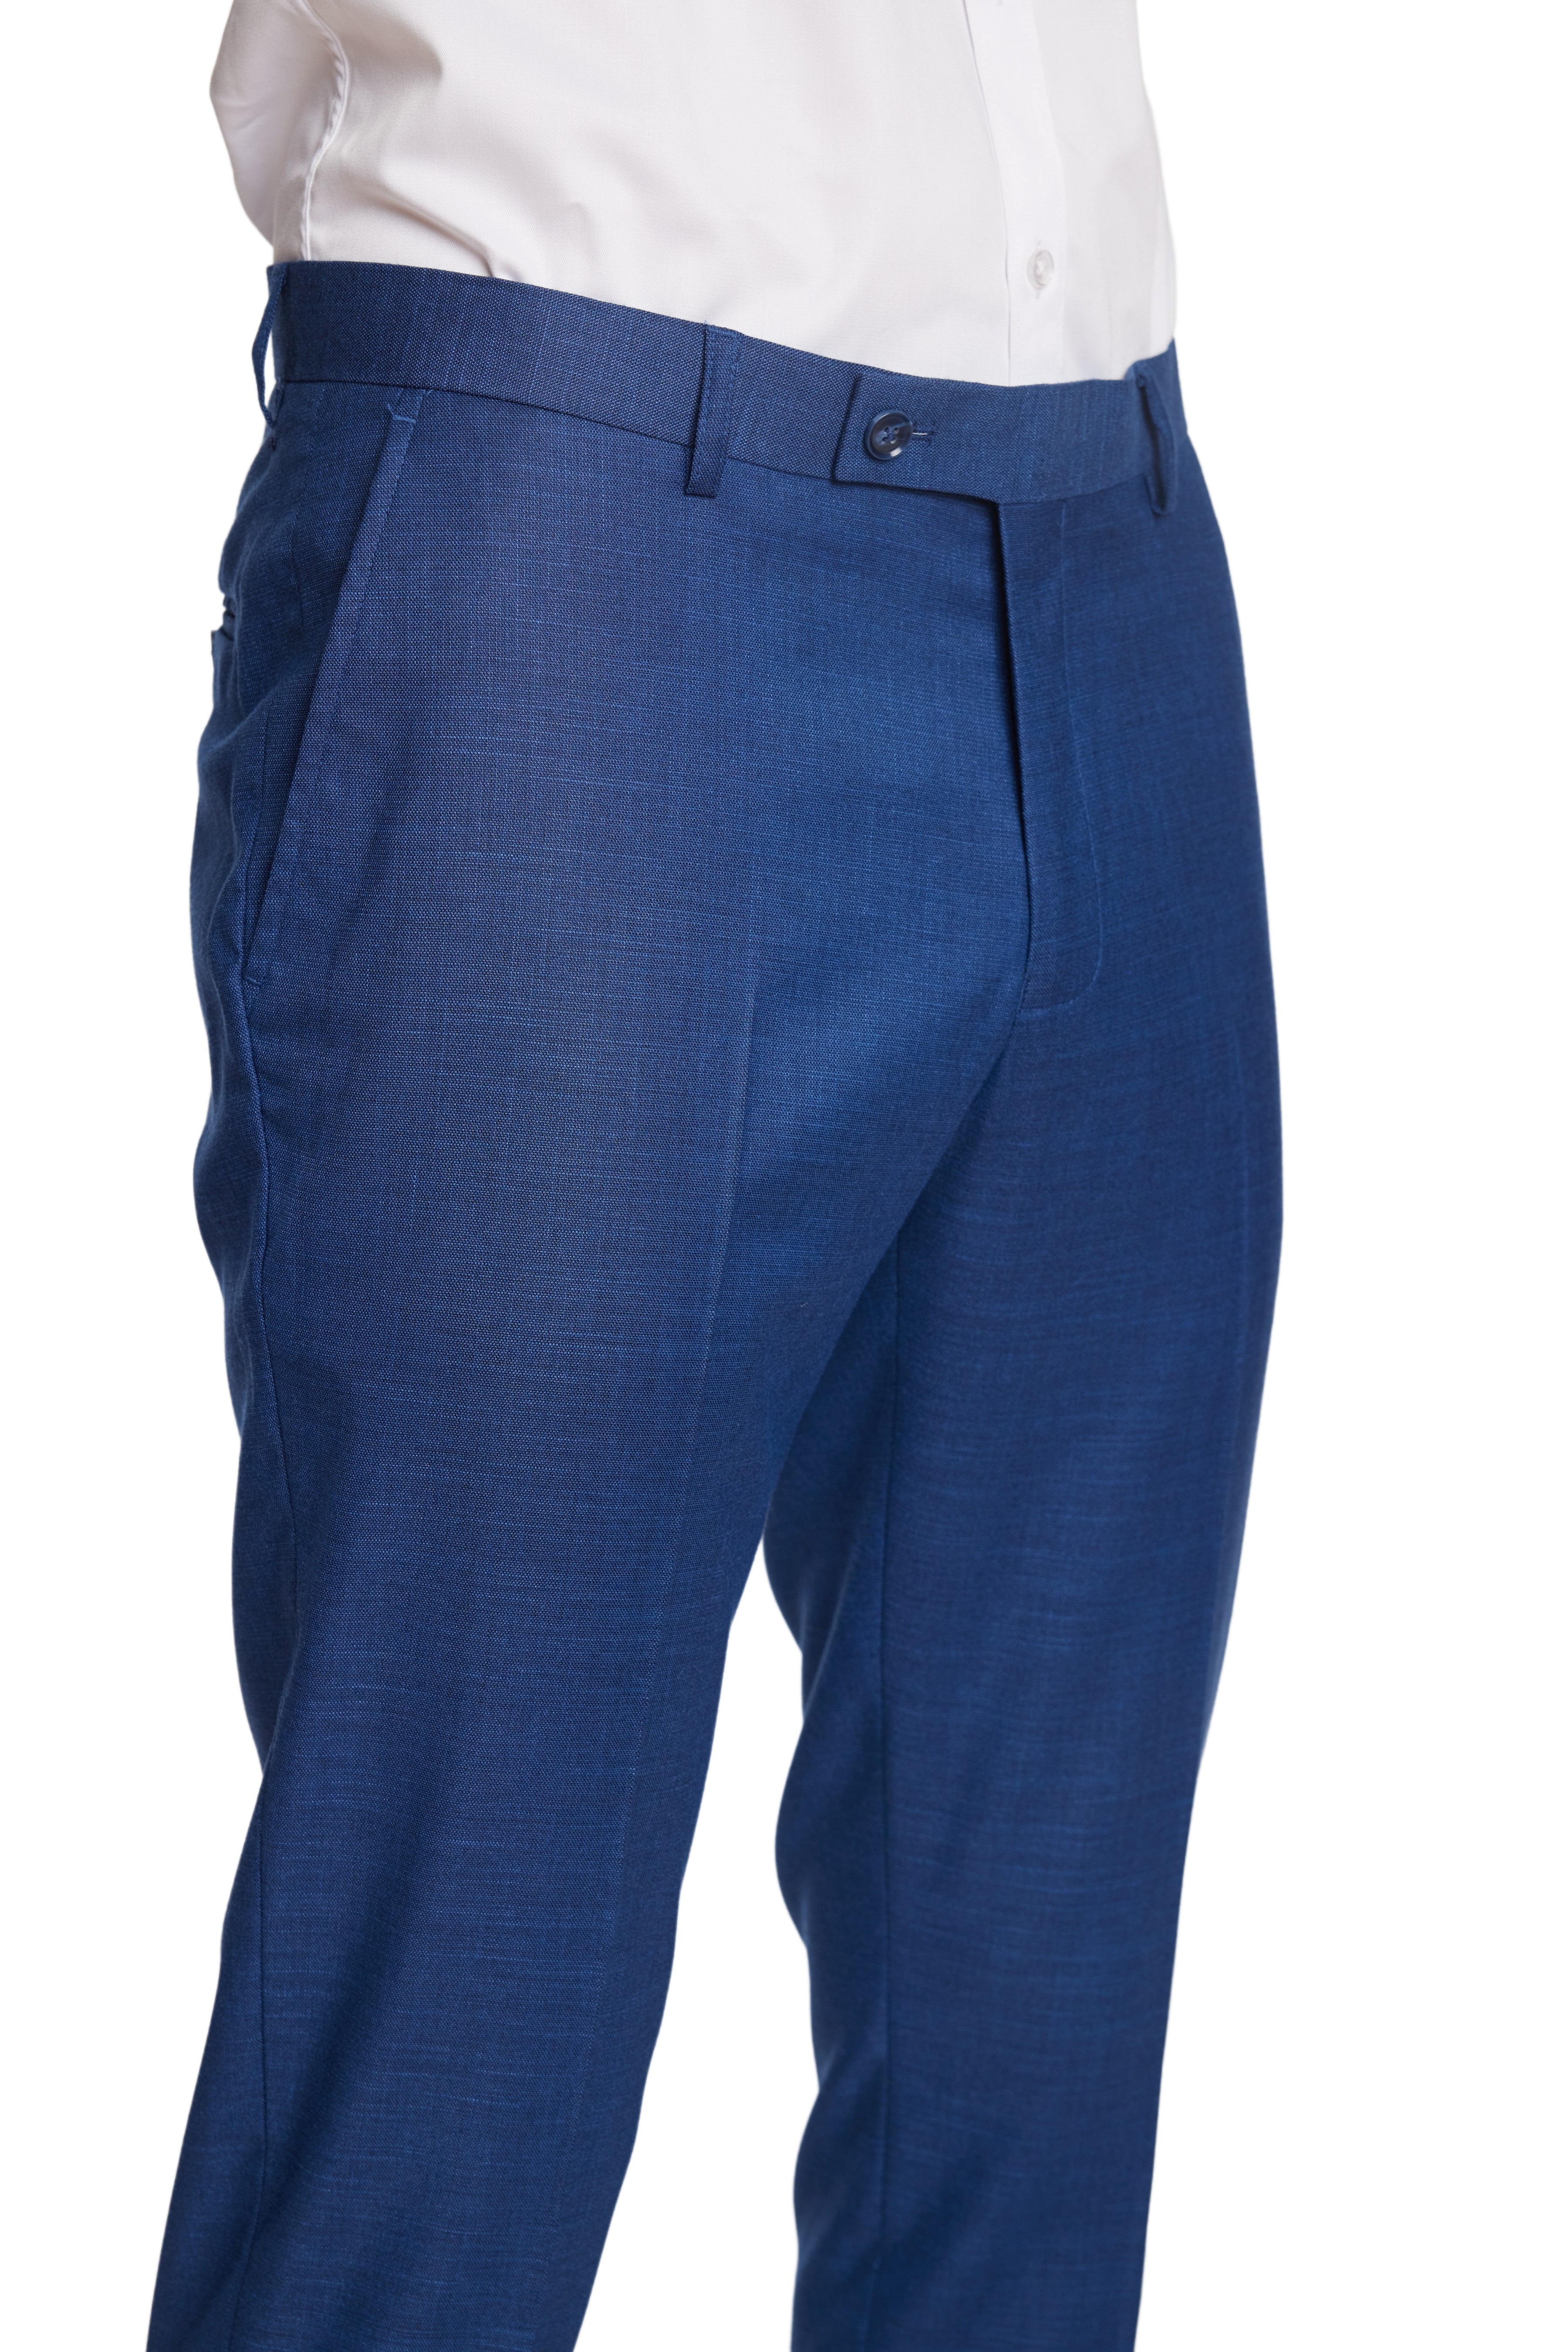 Modern Fit - Downing Pants - Dark Blue Shark